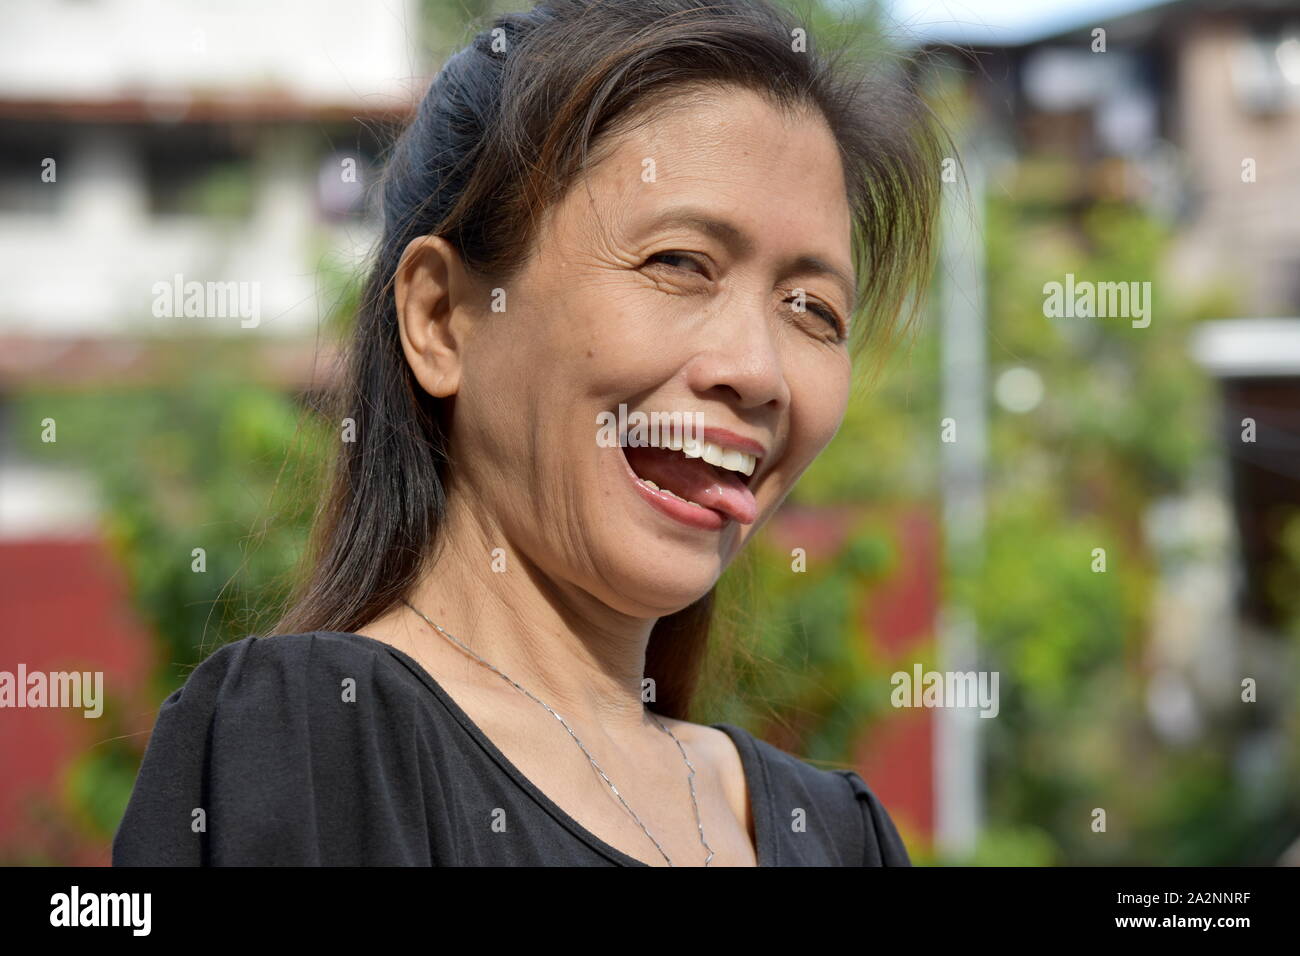 An Insane Filipina Person Stock Photo